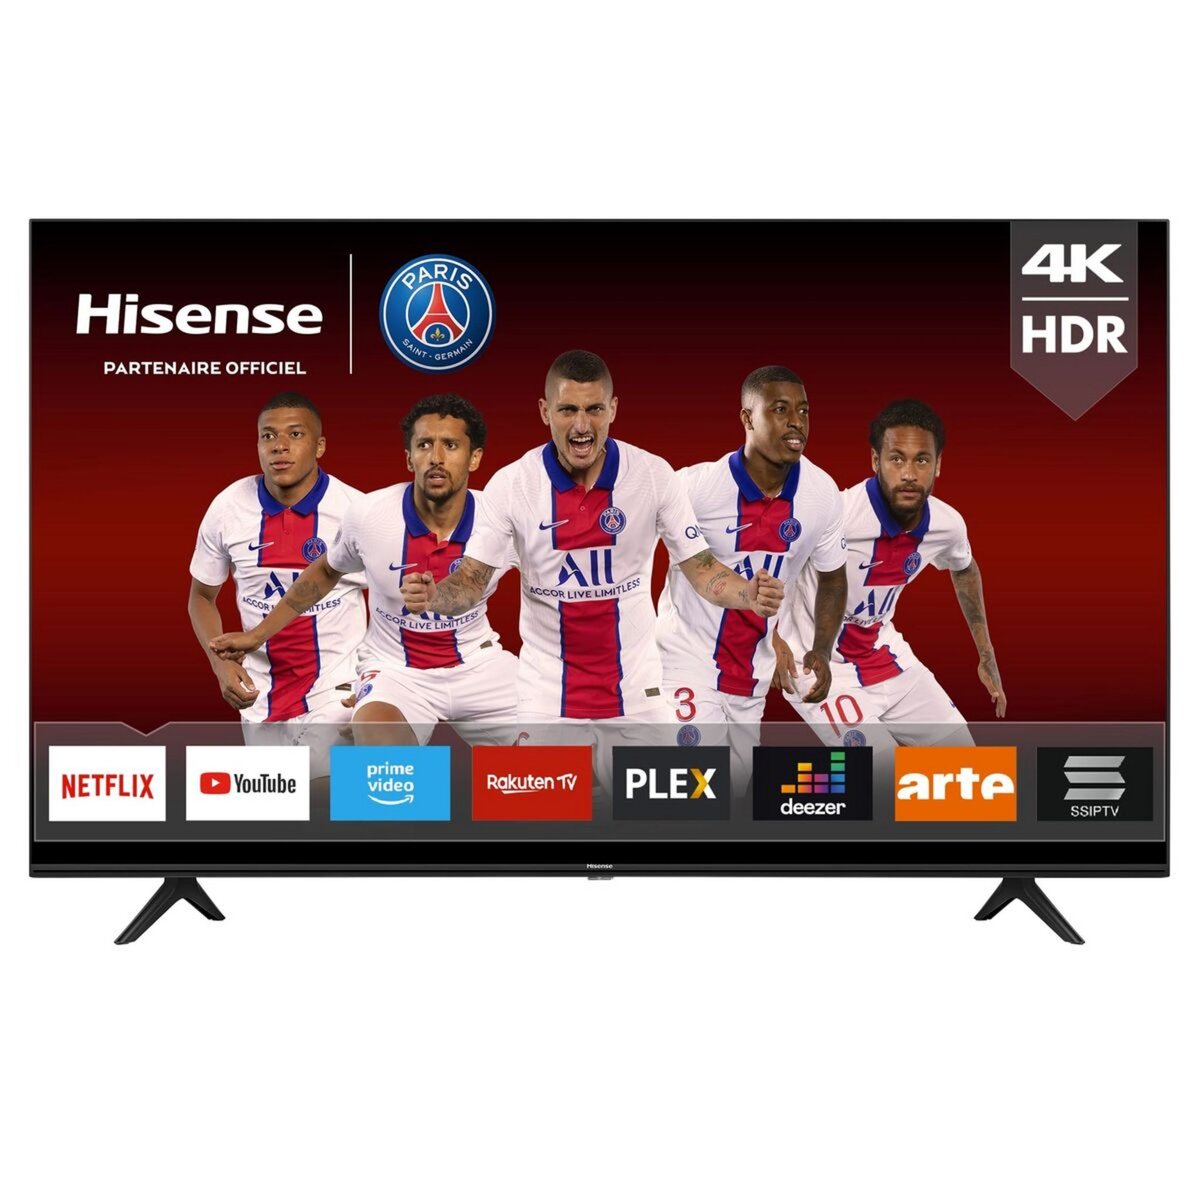 HISENSE 43A7120 TV DLED 4K UHD 108 cm Smart TV